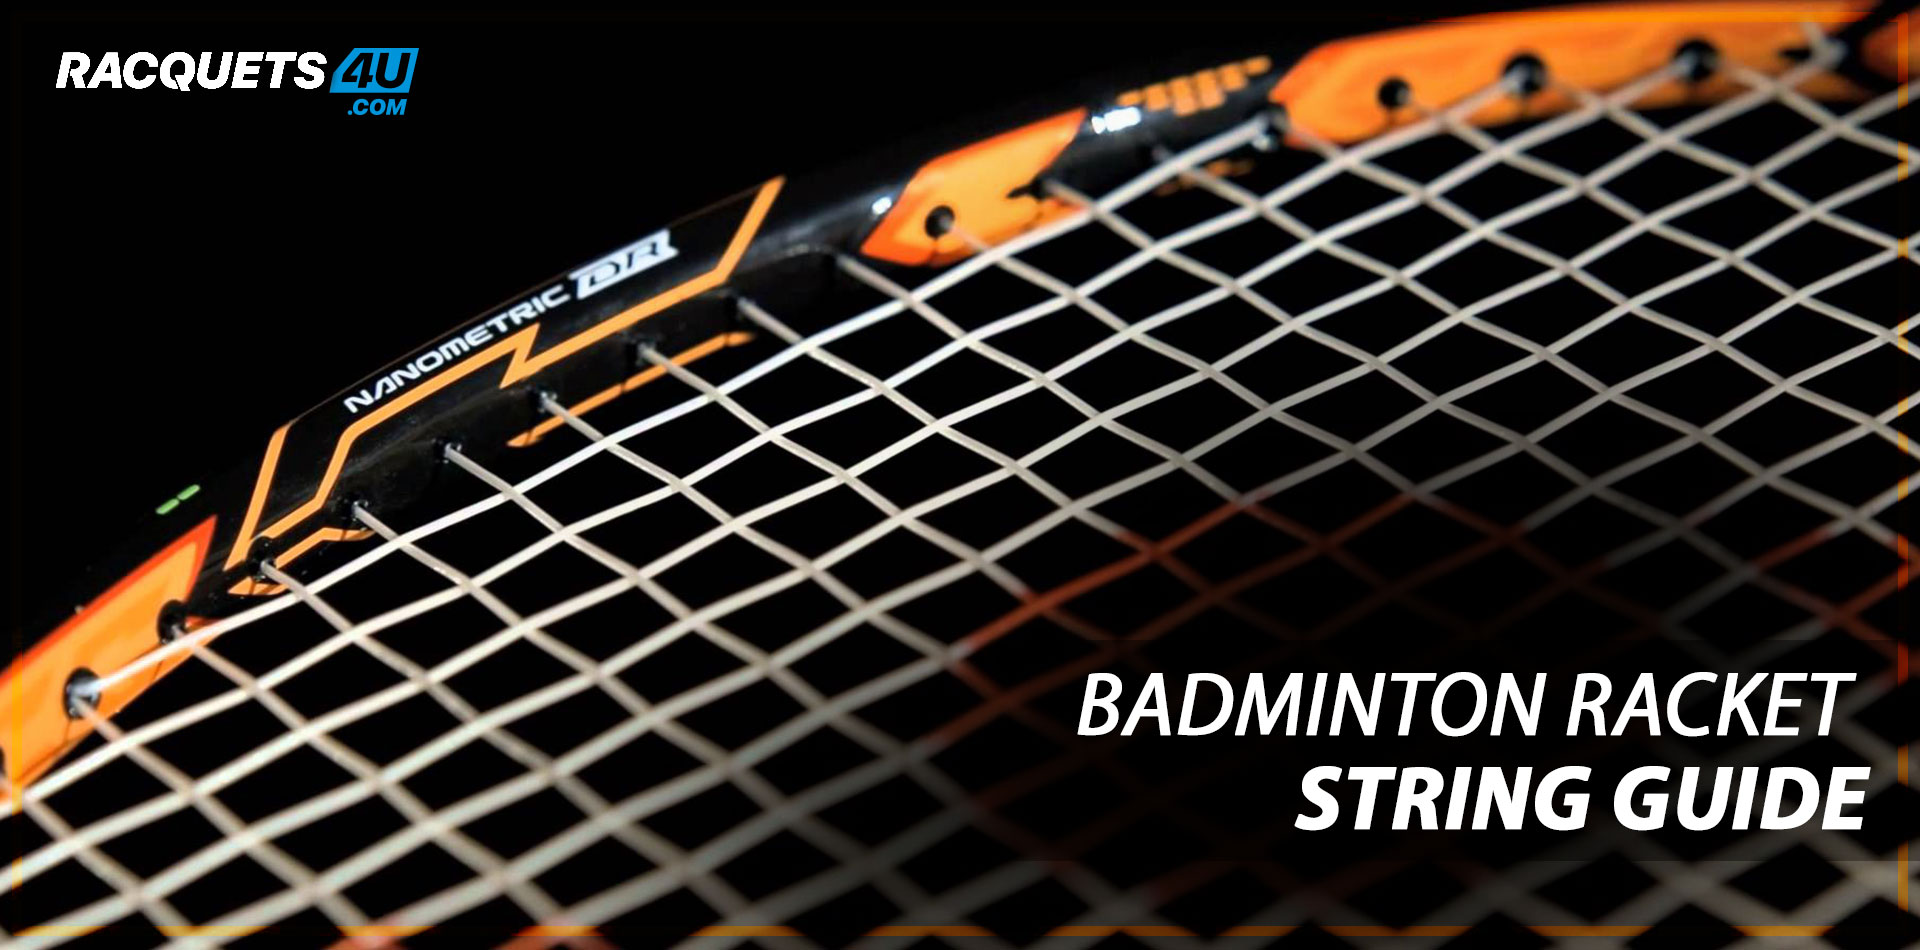 Keen so 2 pcs Badminton Racket String 10m High Flexibility Badminton String Line Training Racket Racquet Lines Badminton Repair Accessory 